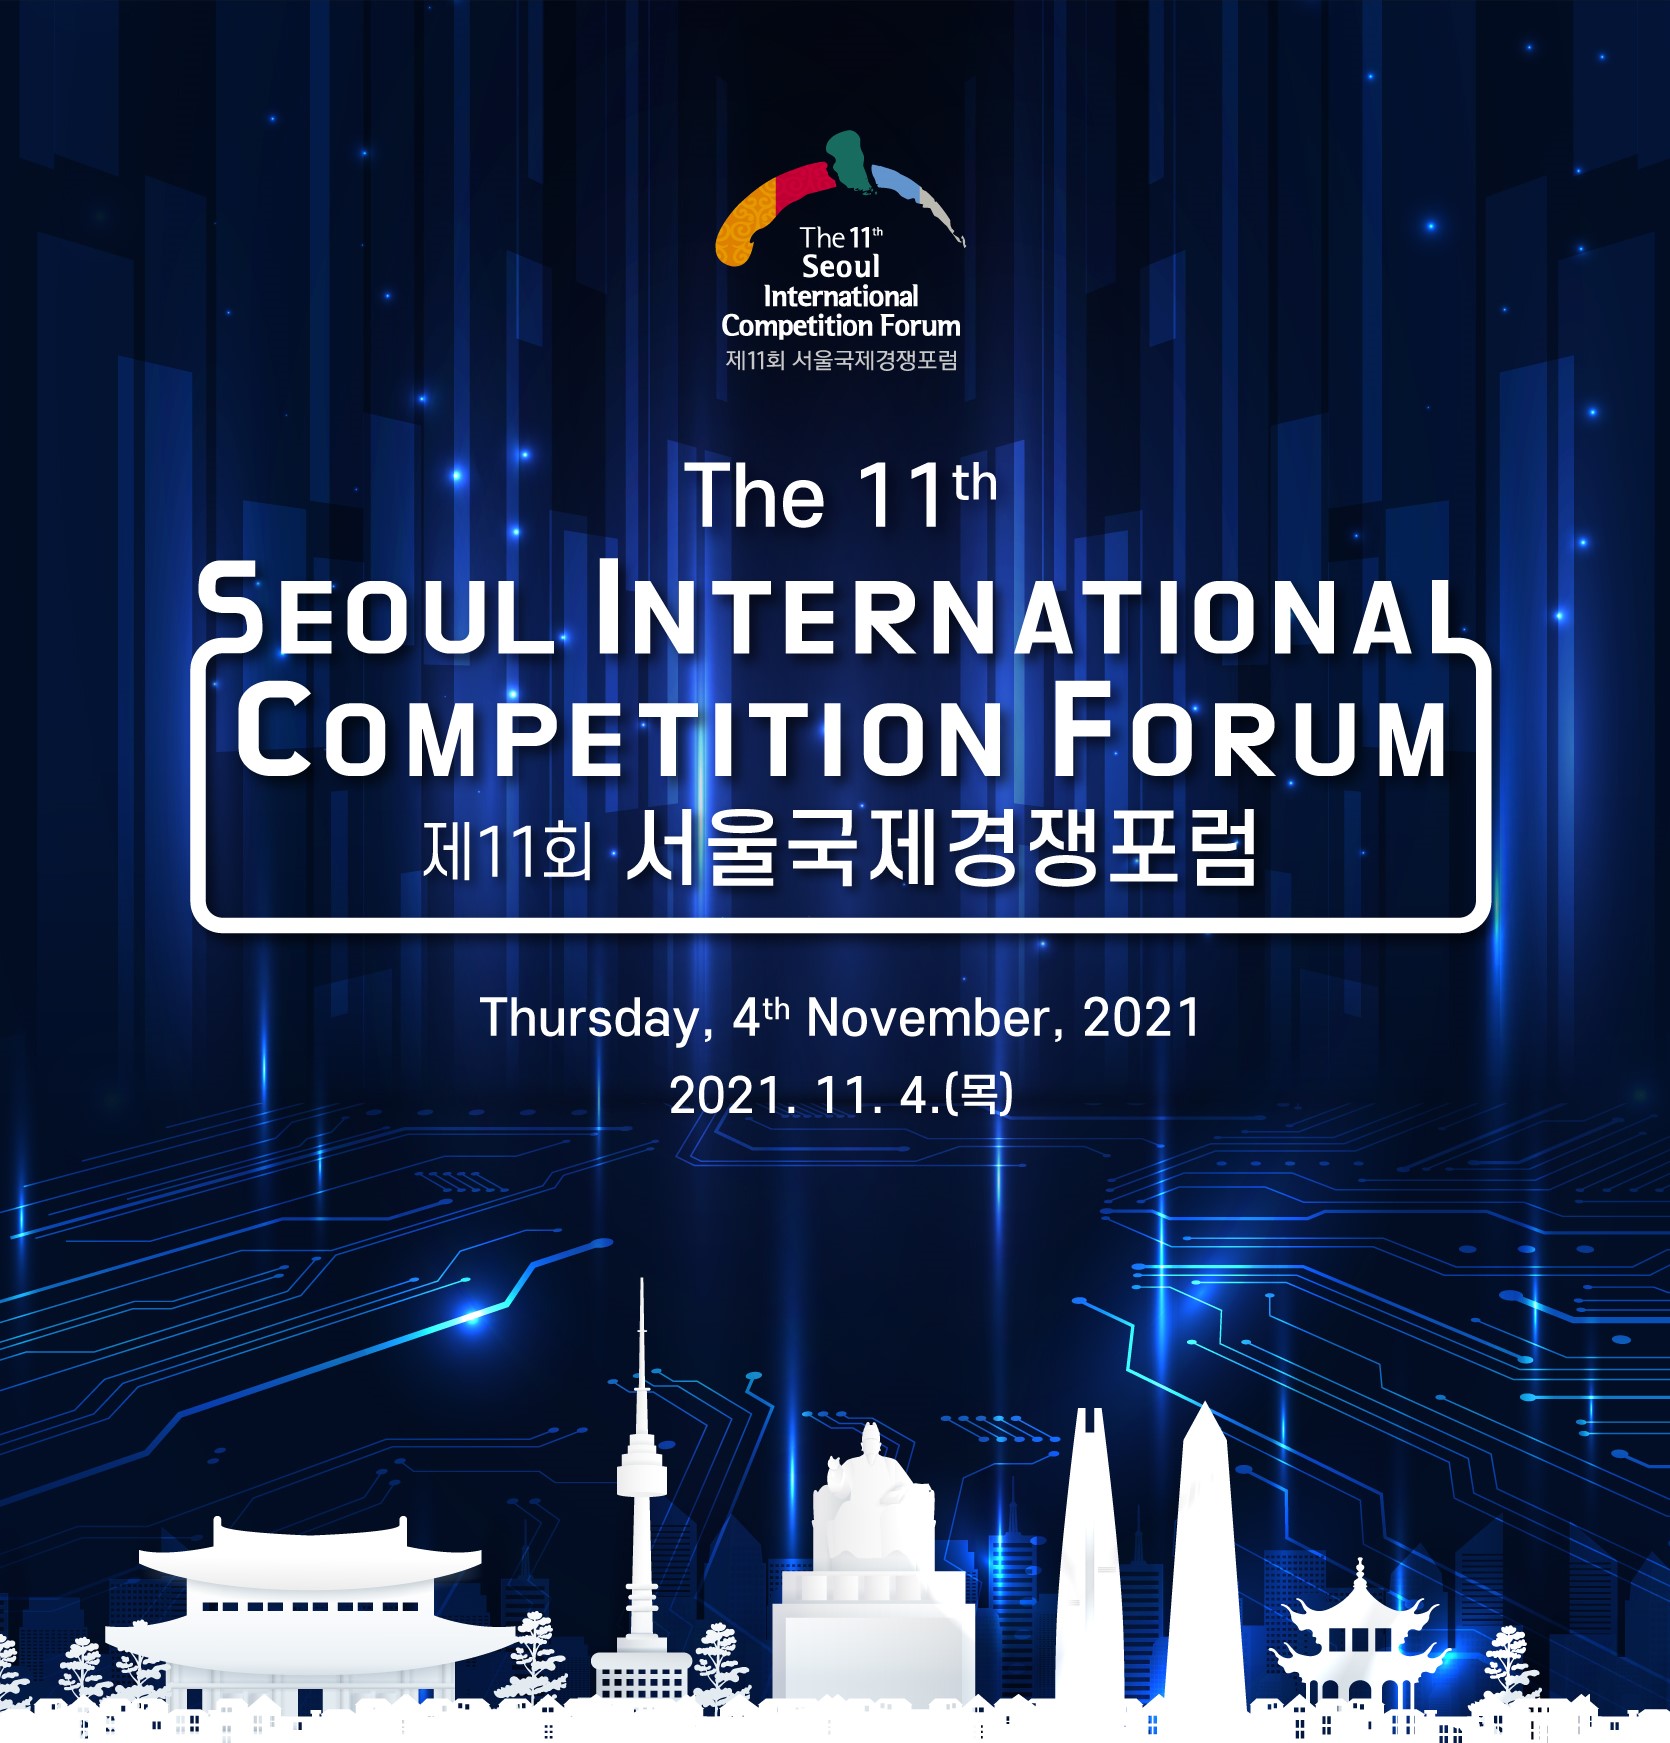 SEOUL INTERNATIONAKL COMPETITION FORUM
제 11회 서울국제경쟁포럼
Thursday, 4th November, 2021
2021. 11.4.(목)